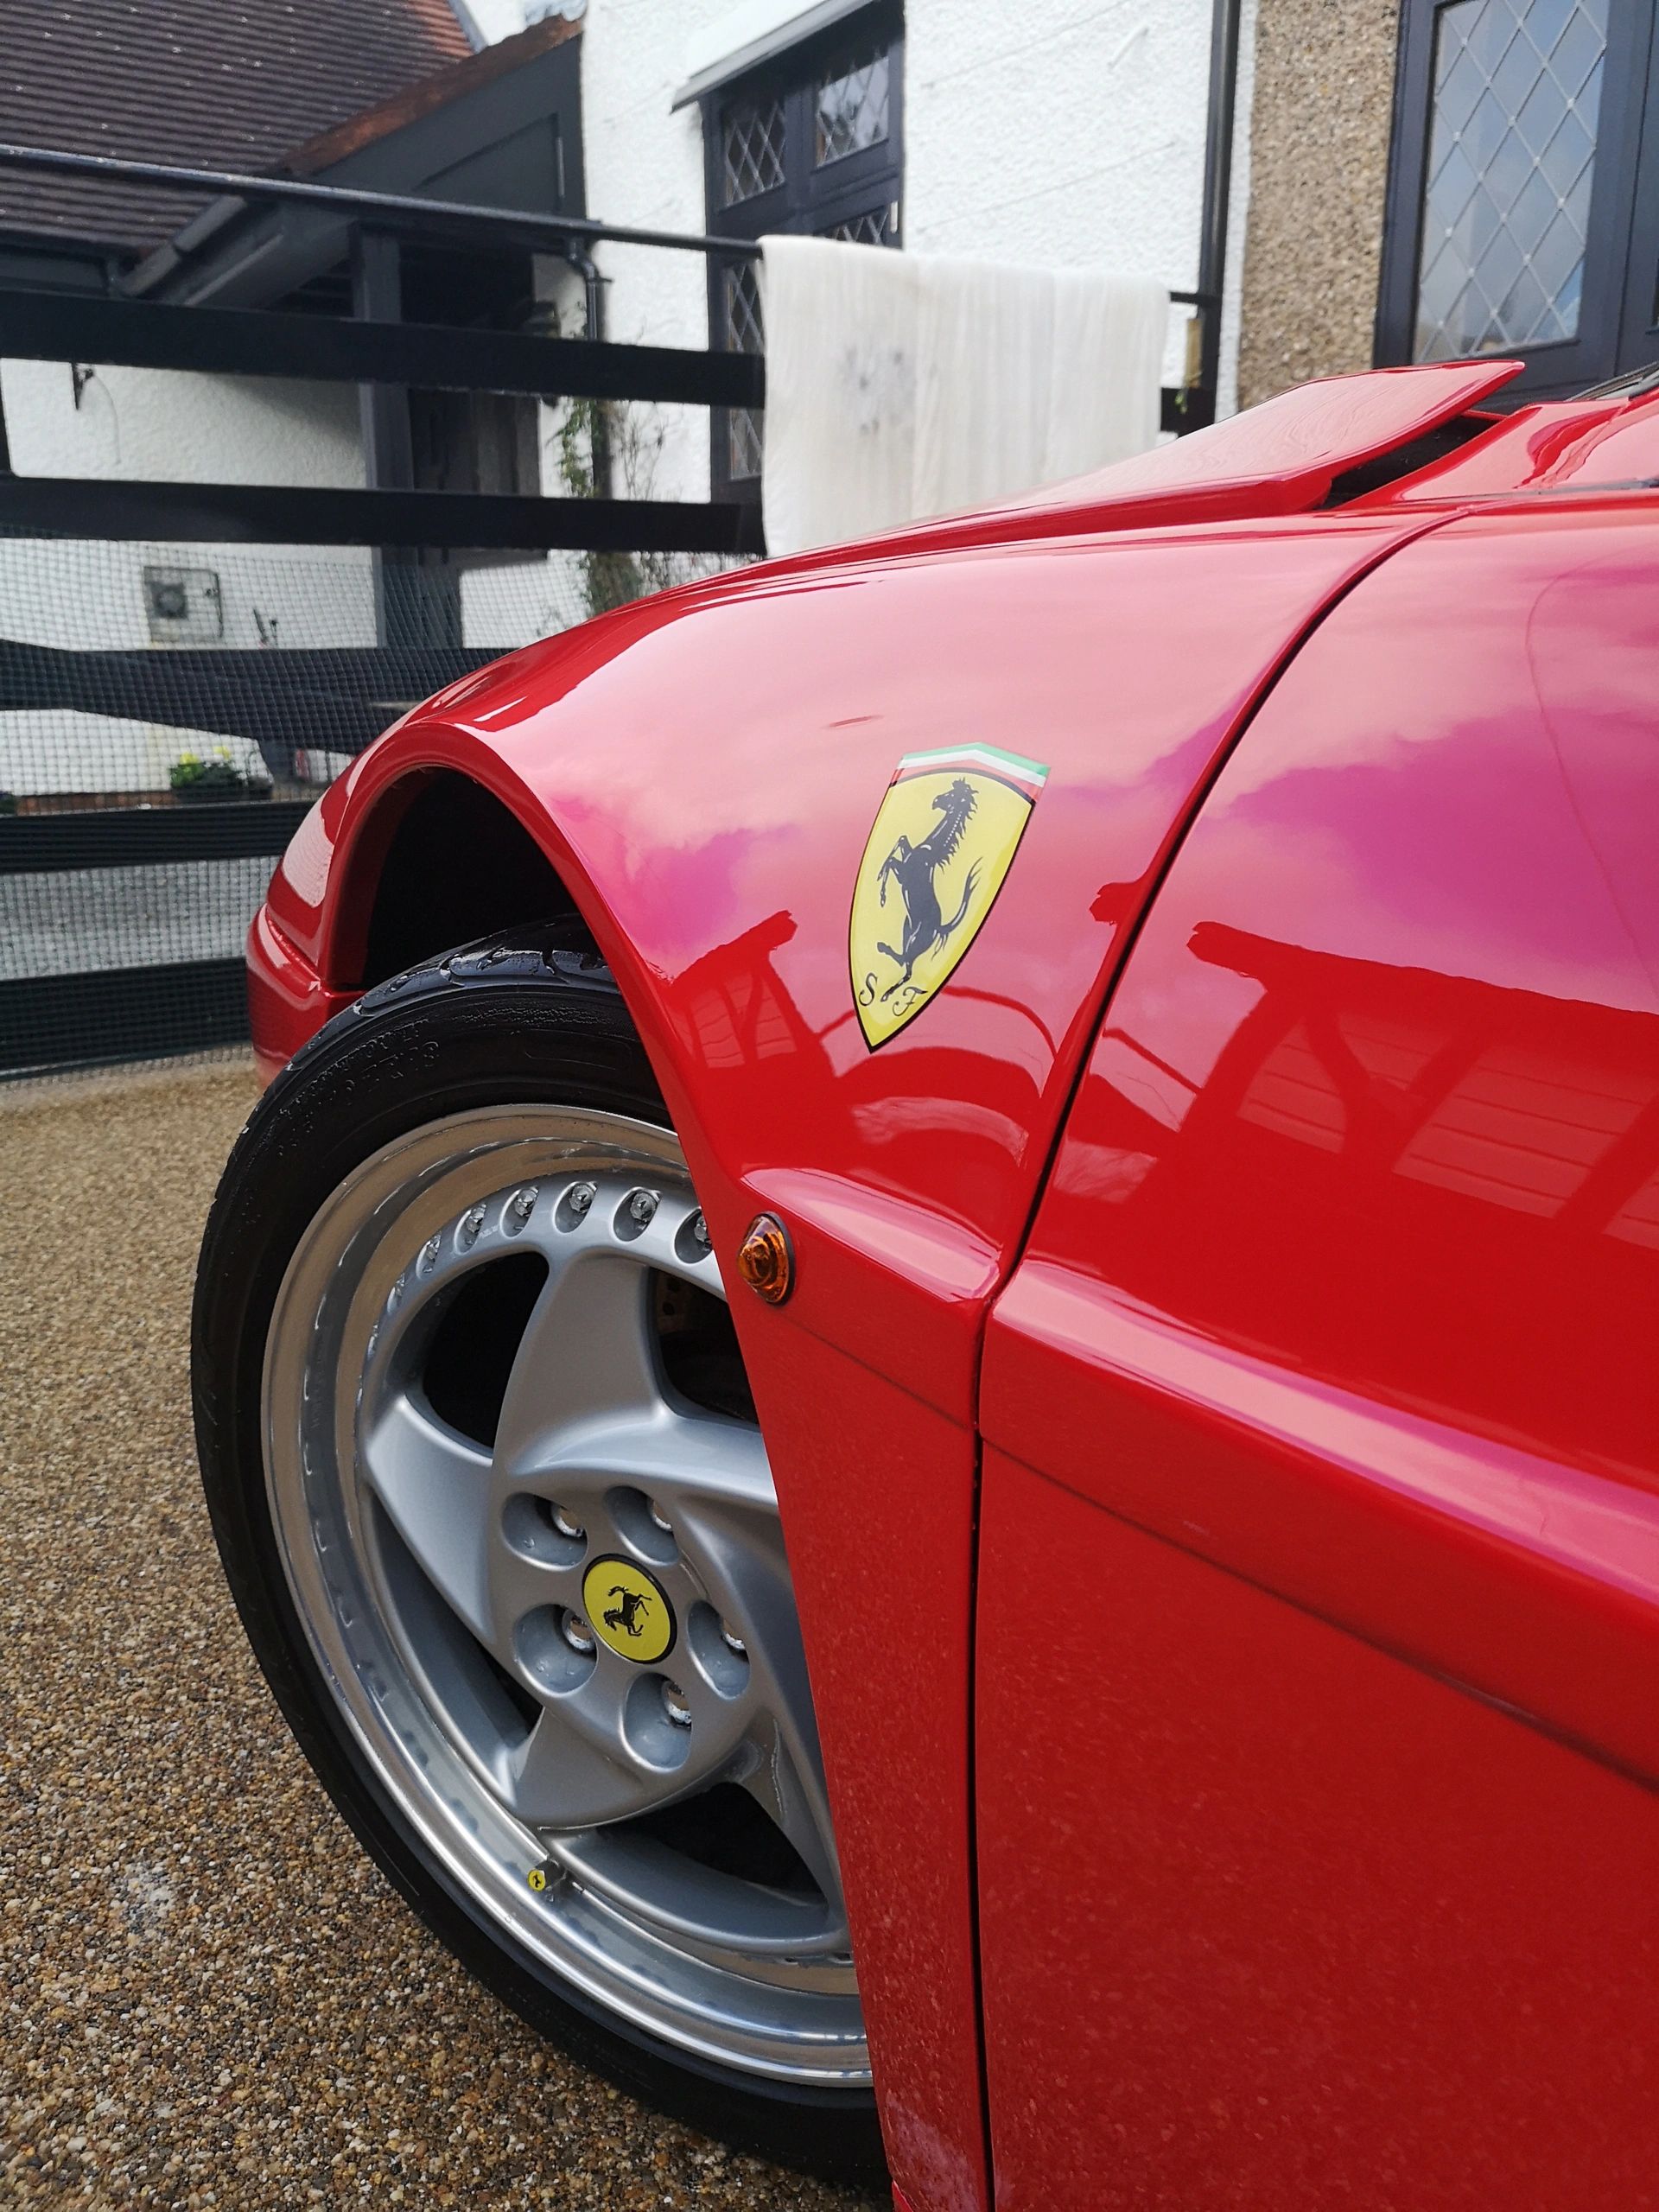 shiny Ferrari after a good coating of wax